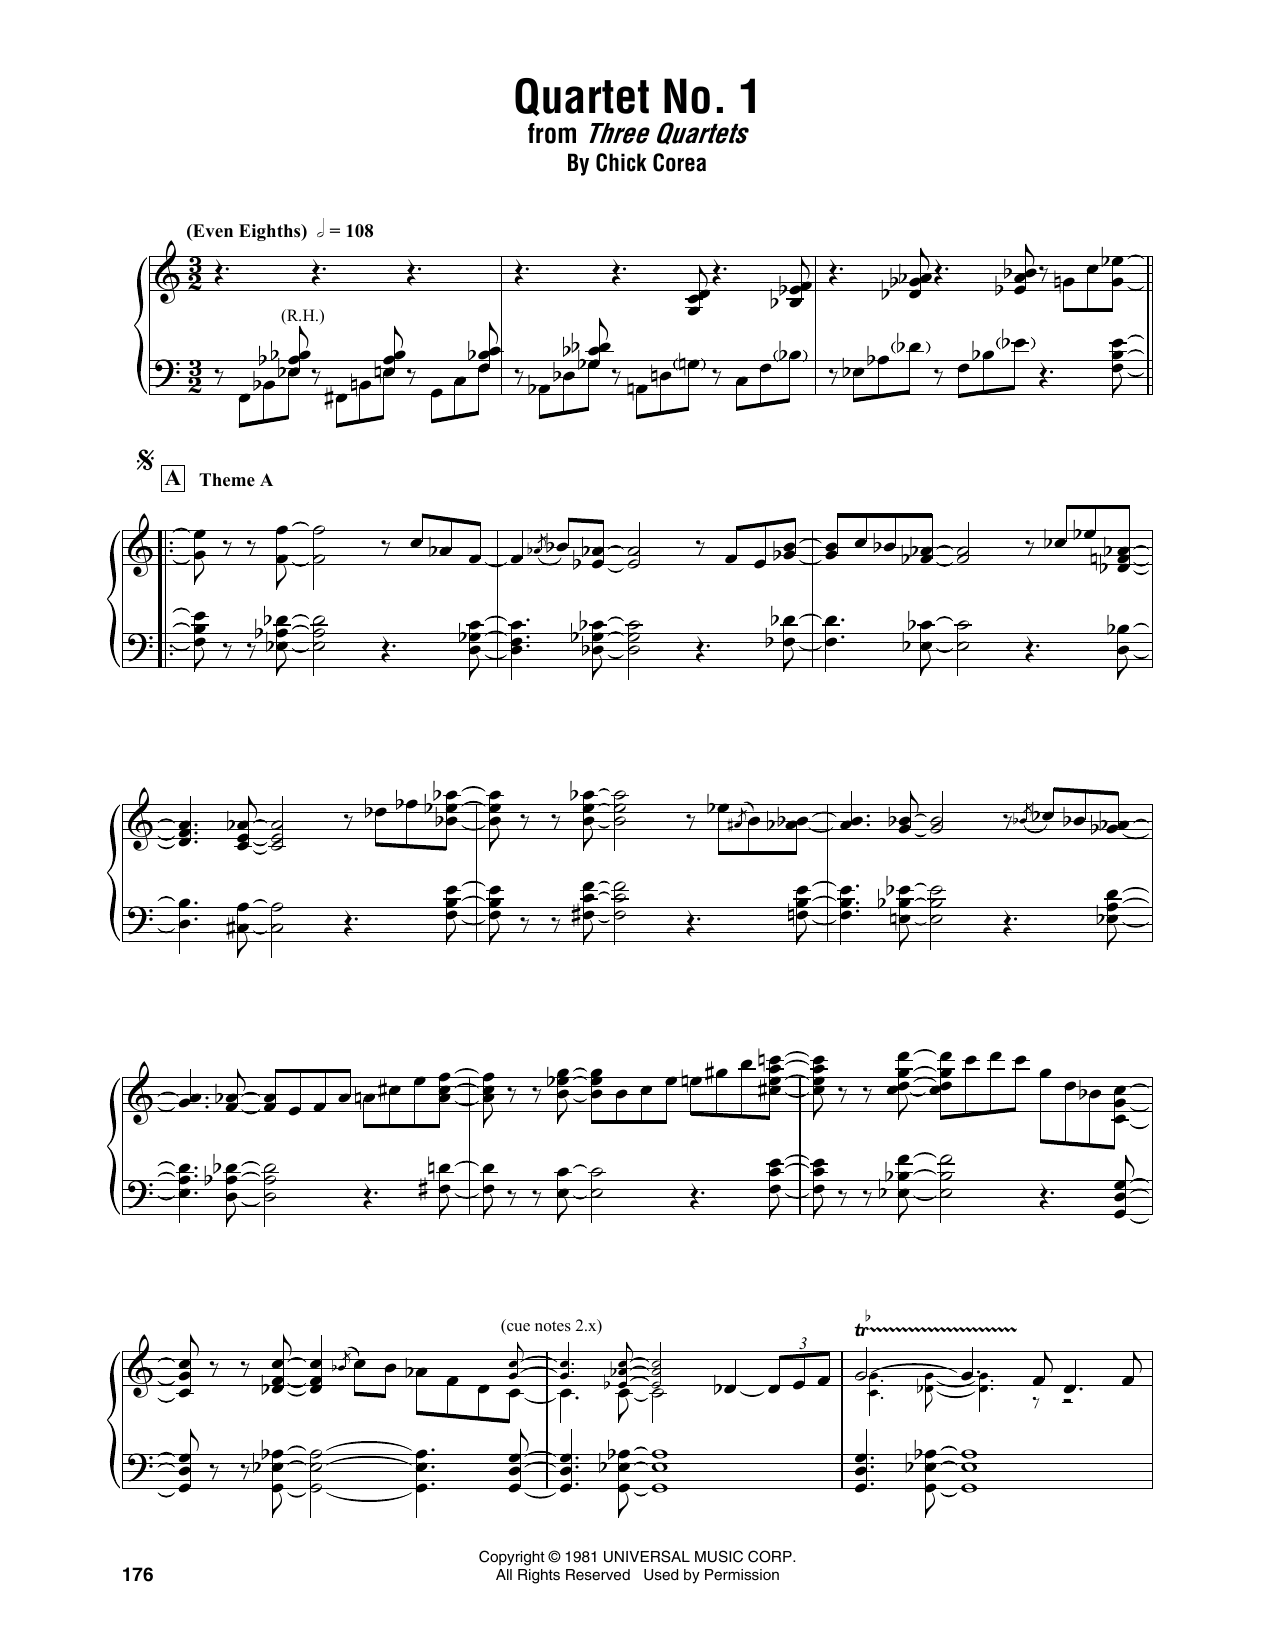 Chick Corea Quartet No. 1 Sheet Music Notes & Chords for Piano Transcription - Download or Print PDF